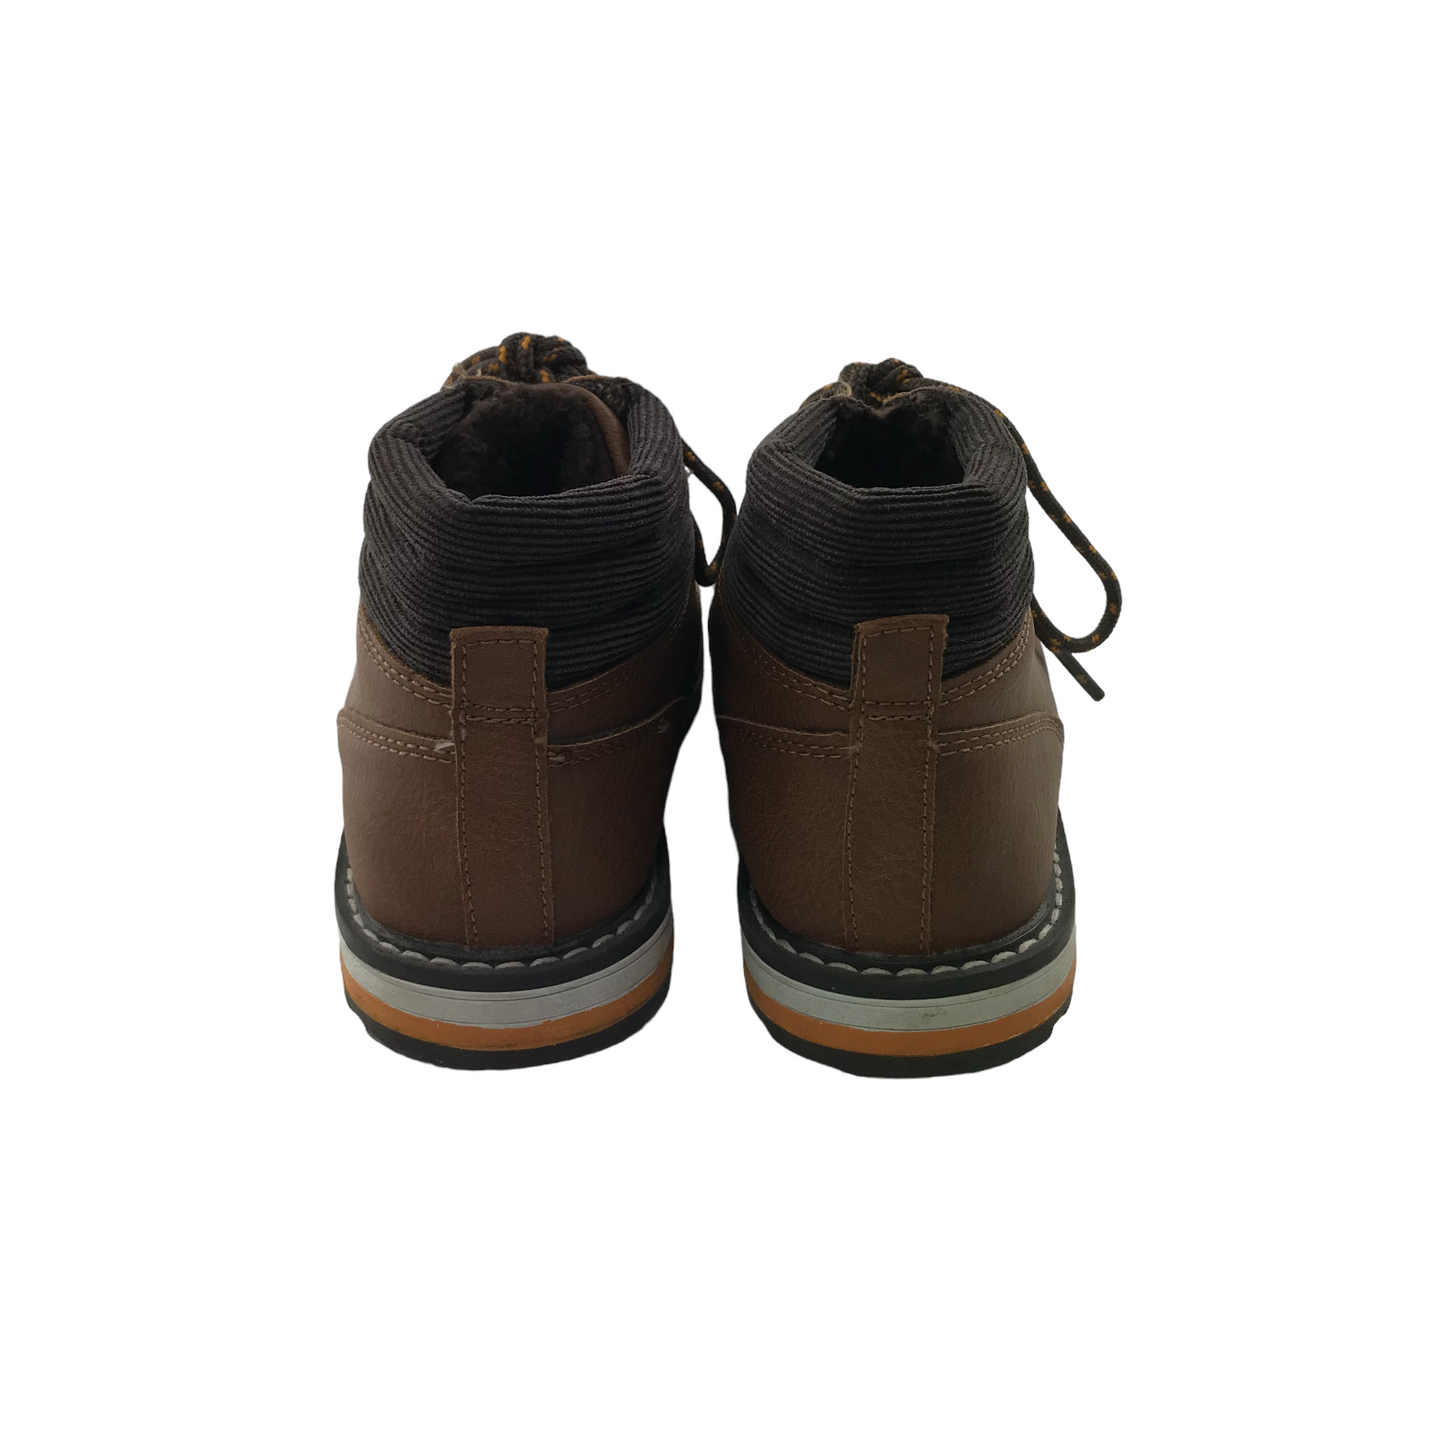 Tan Brown High Tops Shoes Shoe Size 3